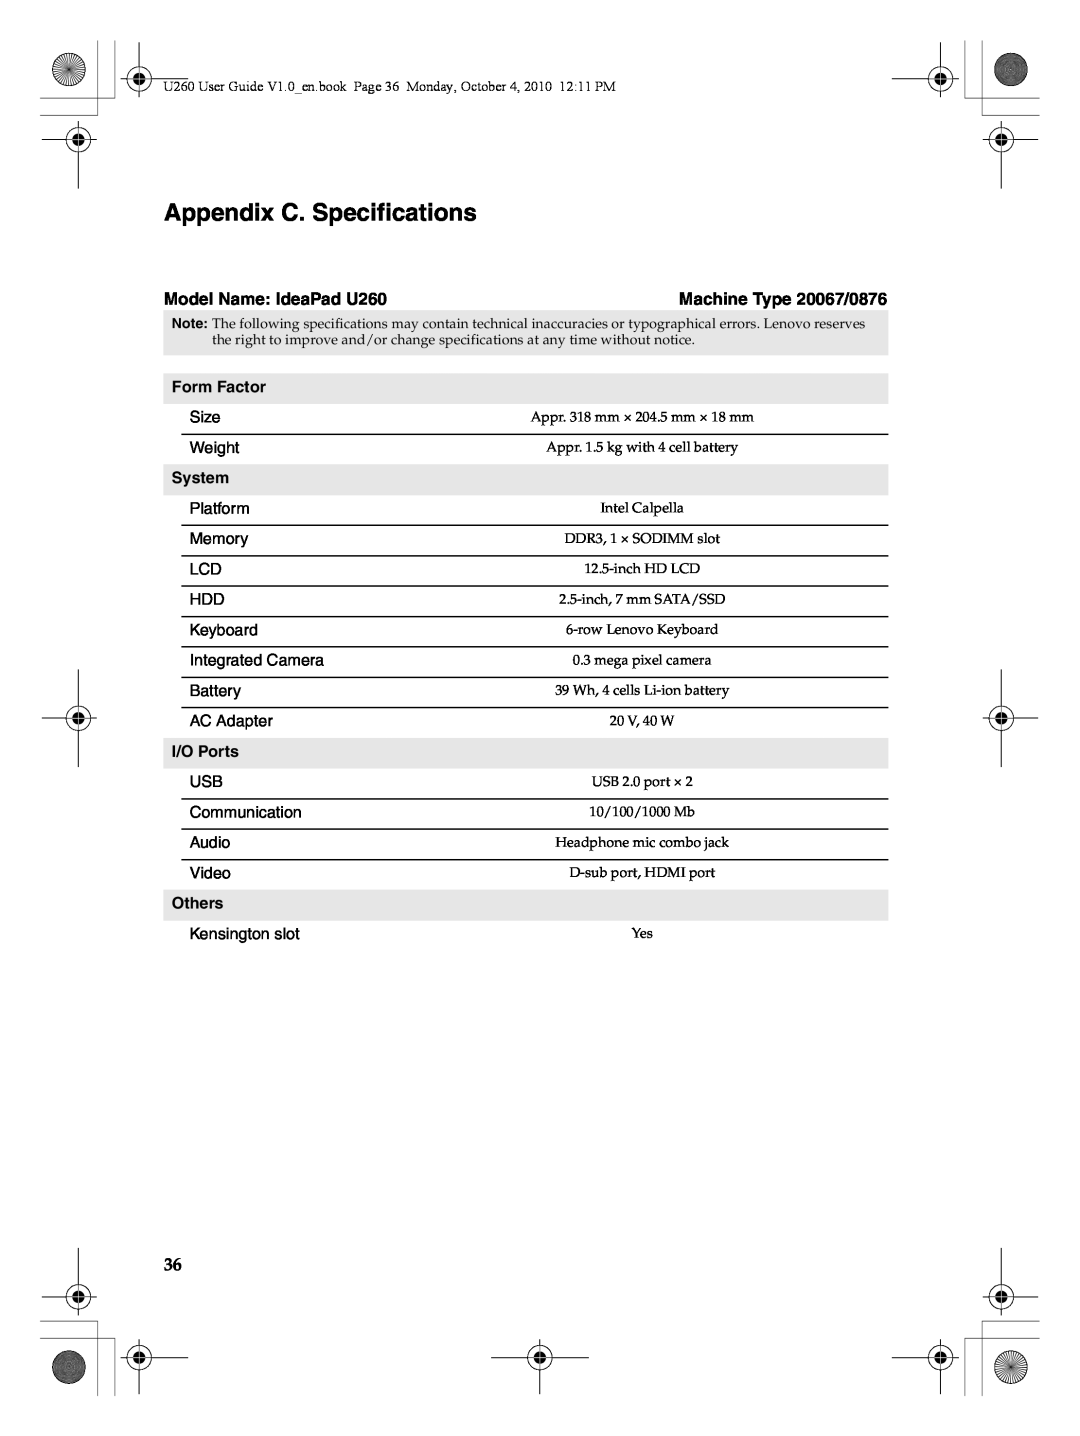 Lenovo Appendix C. Specifications, Model Name IdeaPad U260, Machine Type 20067/0876, Form Factor, System, I/O Ports 